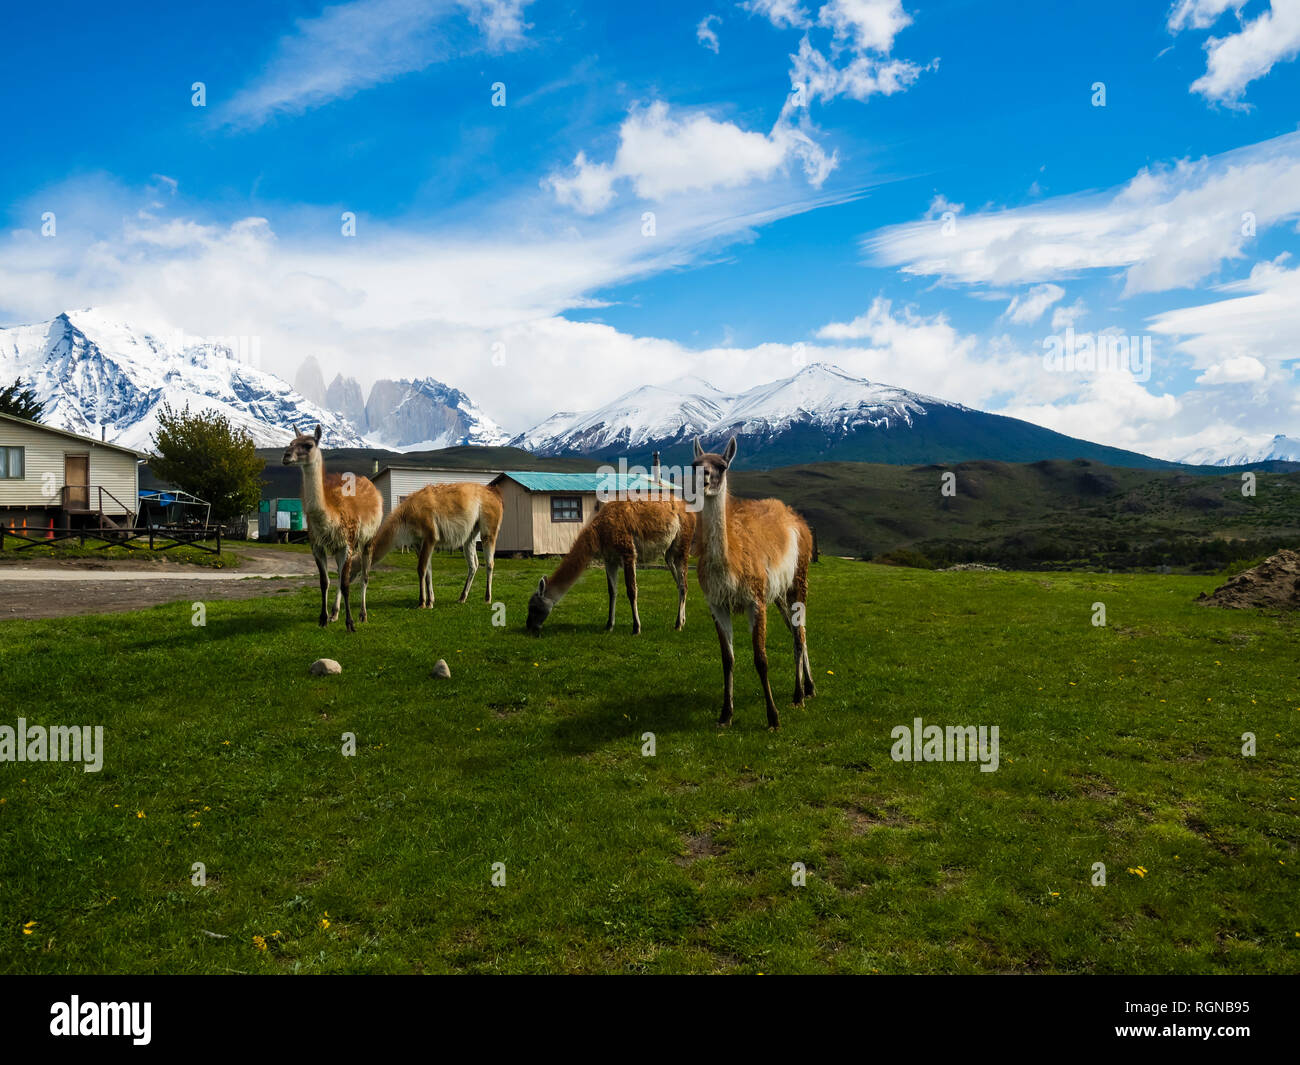 Chile, Patagonia, Torres del Paine National Park, Cerro Paine Grande and Torres del Paine, guanacos Stock Photo